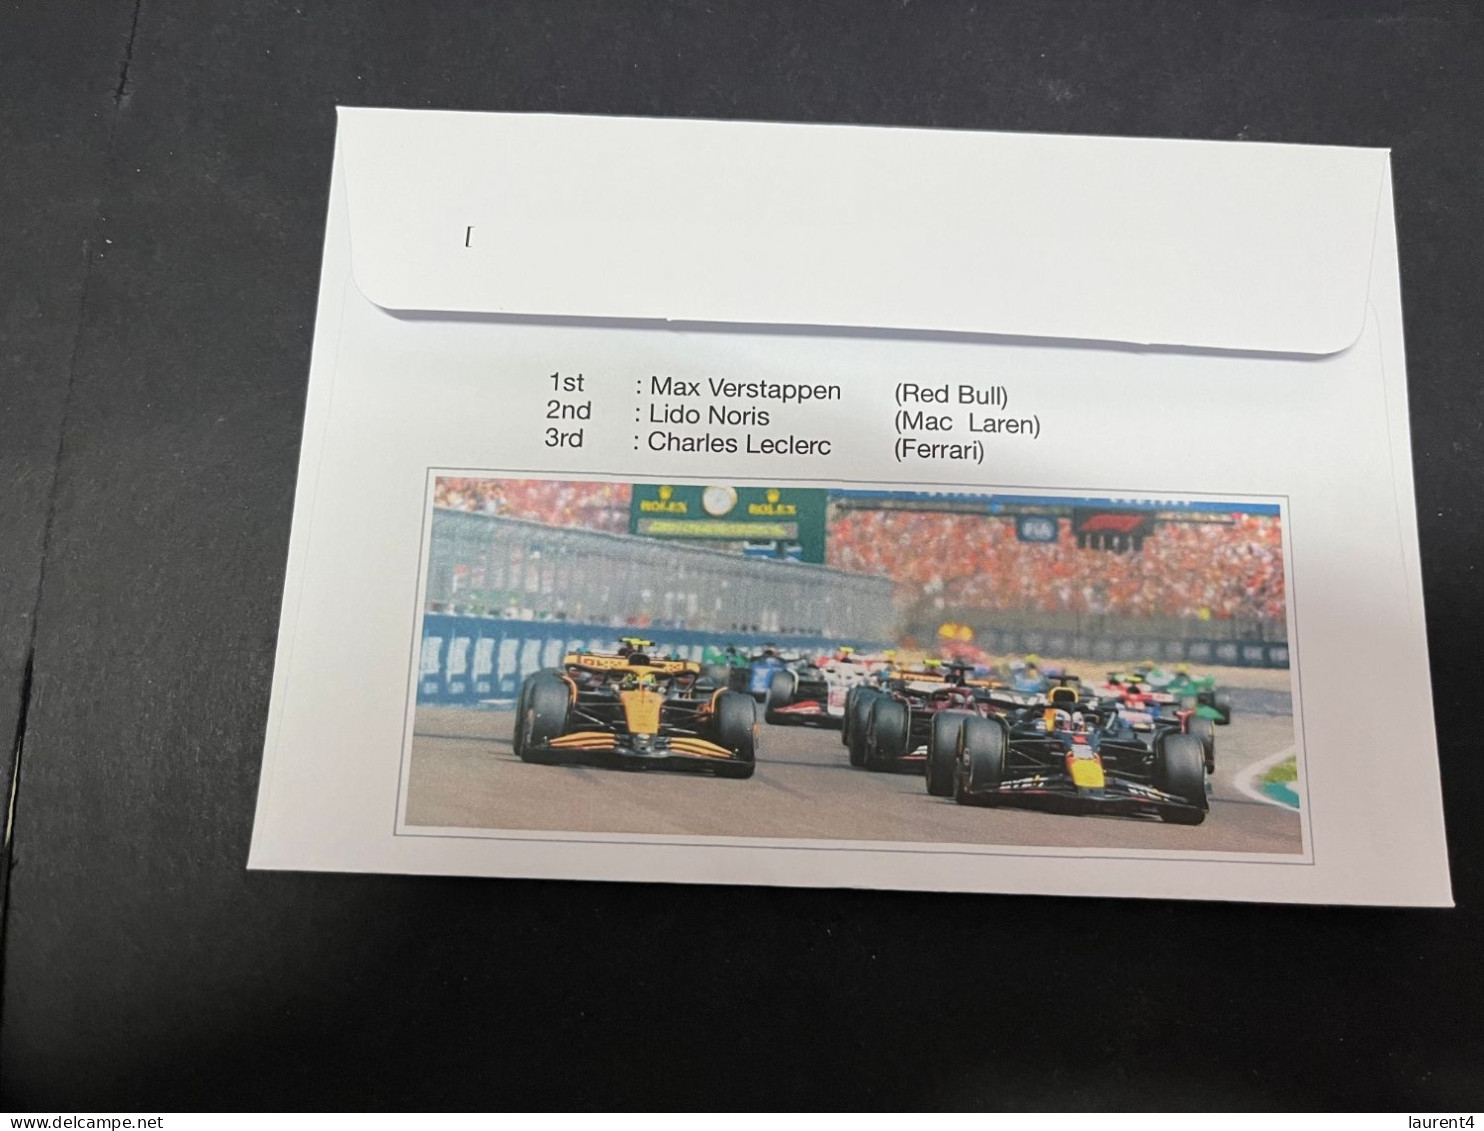 20-5-2024 (2 Z 42) Formula One - 2024 - Italy Imola Grand Prix - Winner Max Verstappen (19 May 2024) Formula 1 Stamp - Automobile